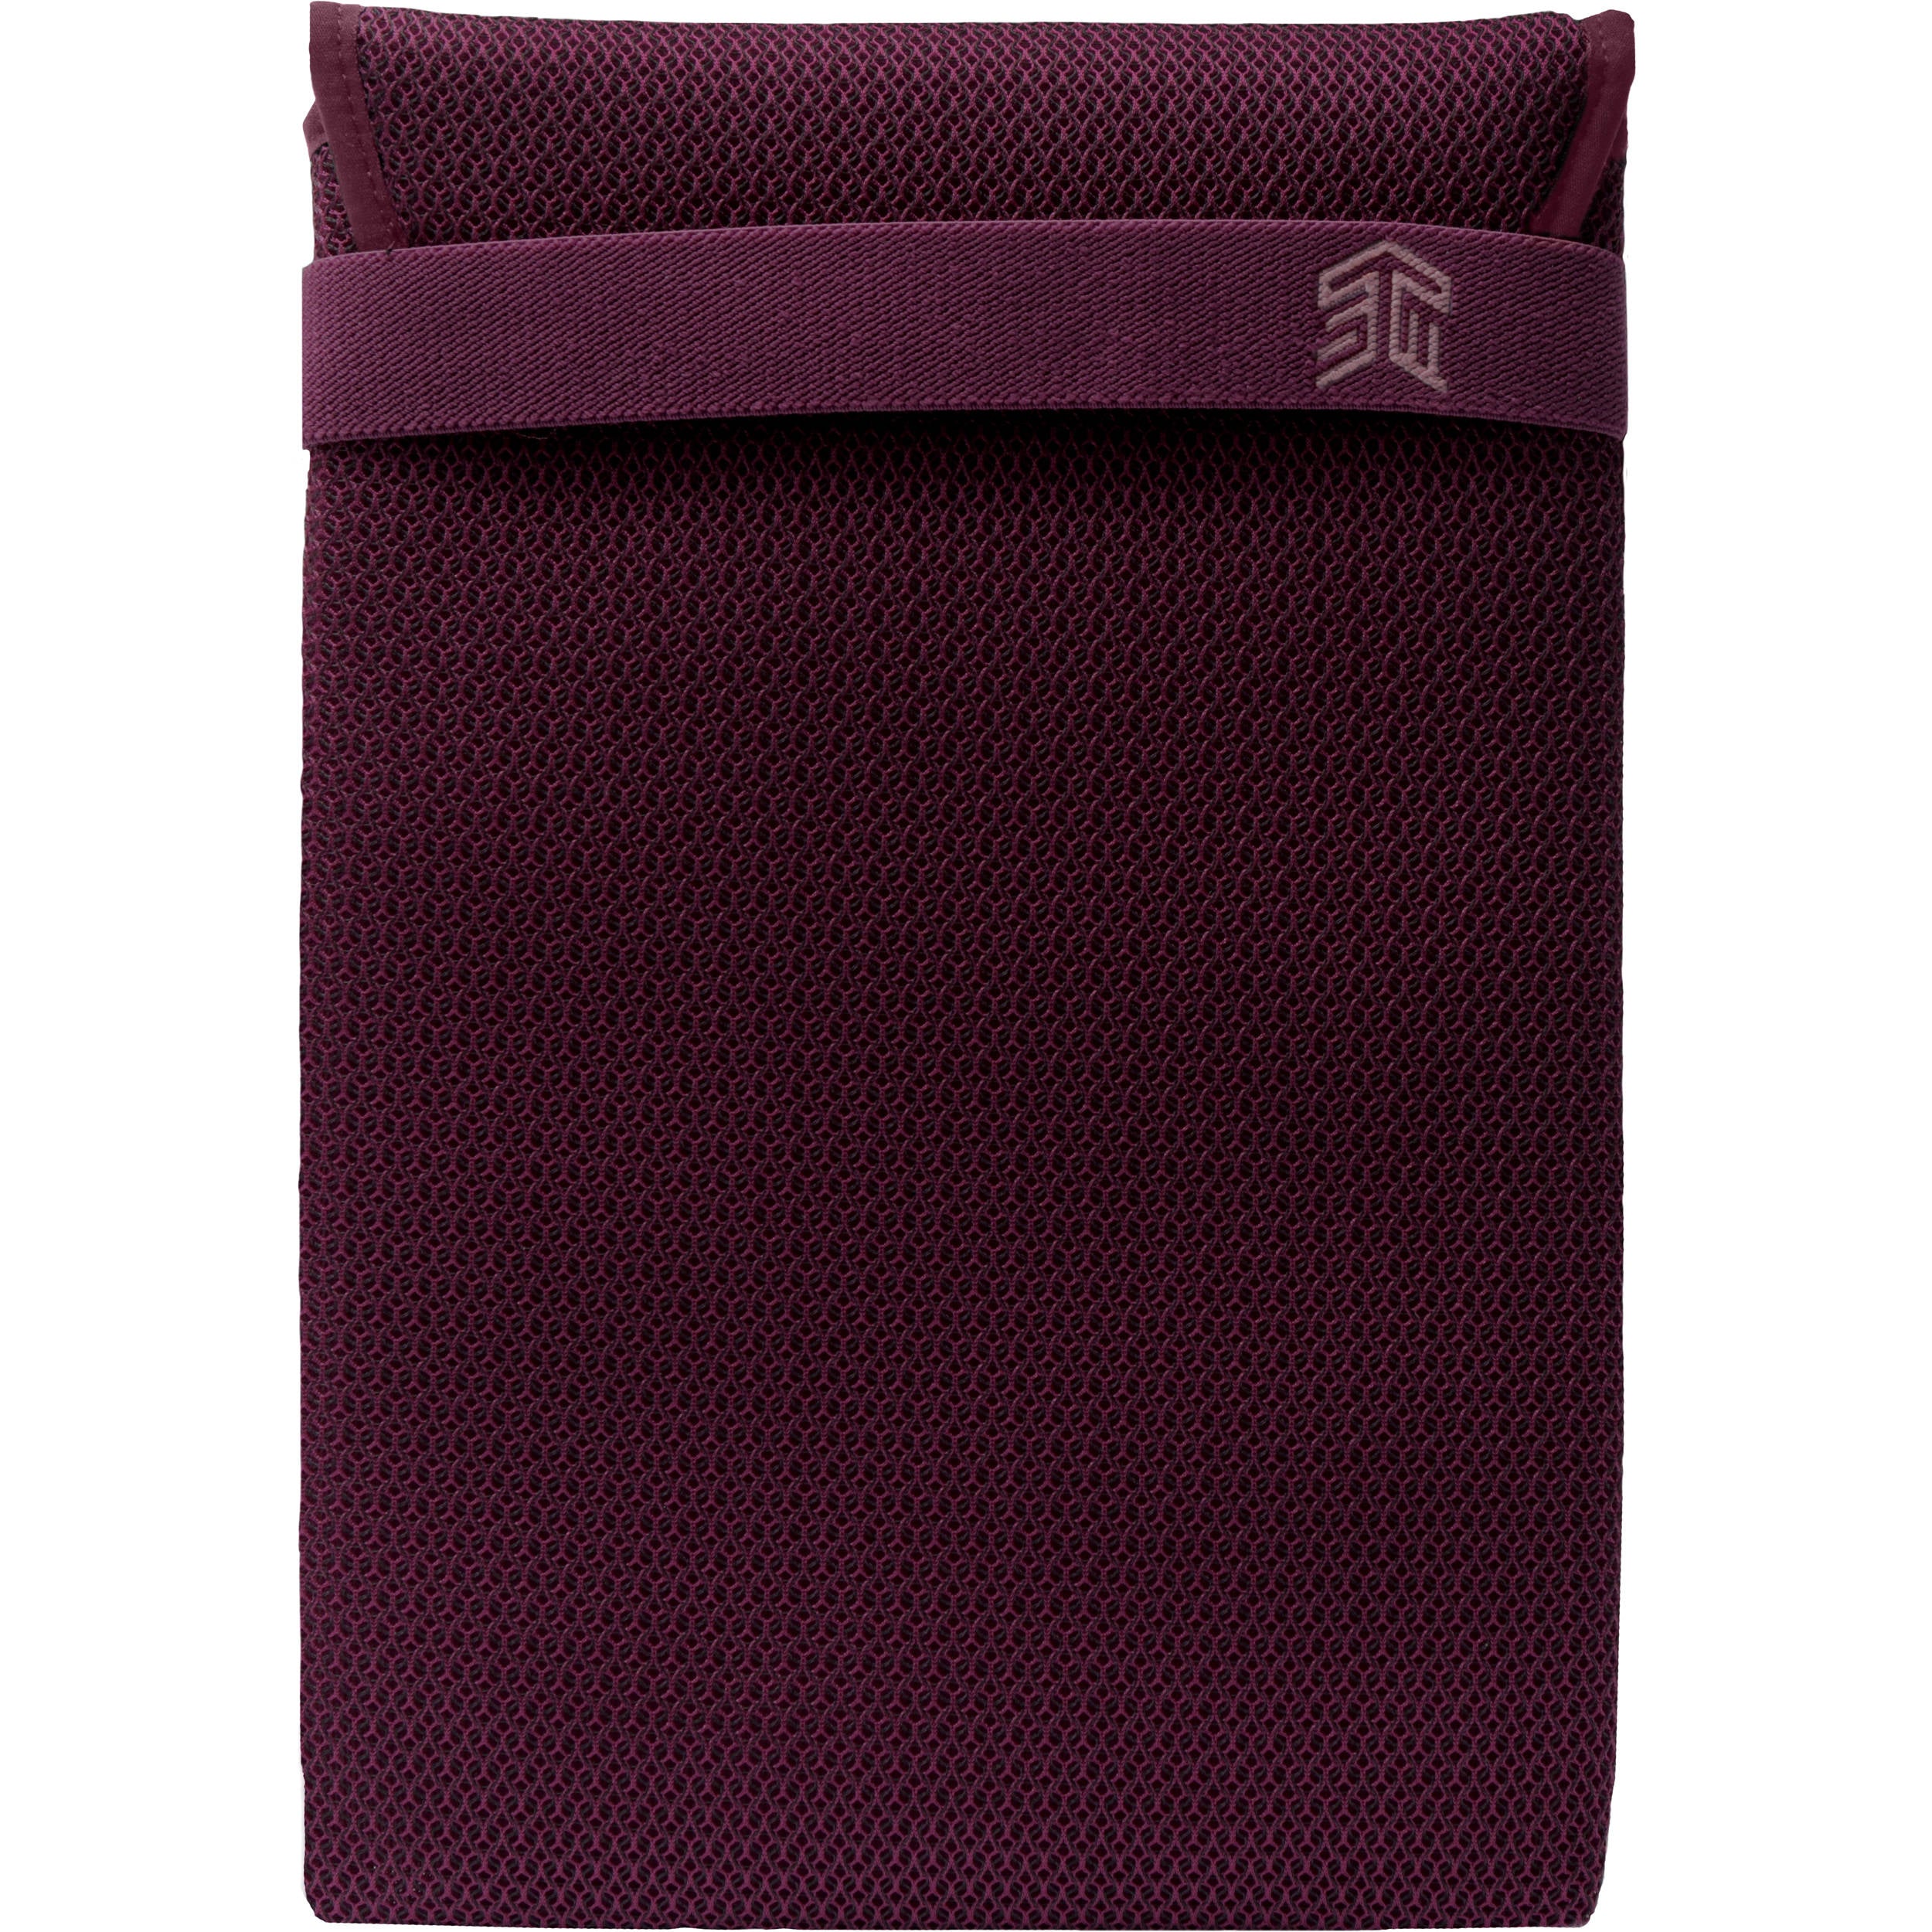 STM Sleeve Knit Glove Macbook Pro 13-inch